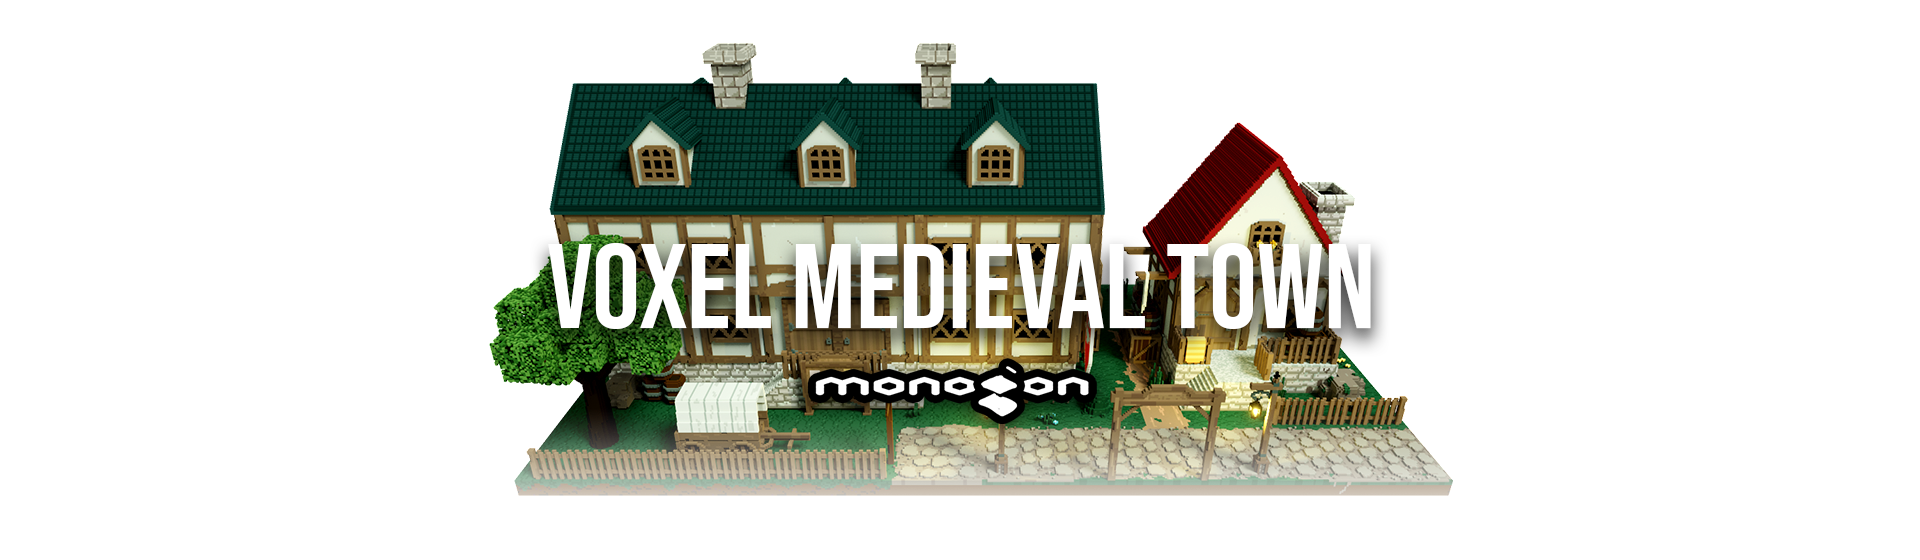 Voxel Medieval Town - monogon